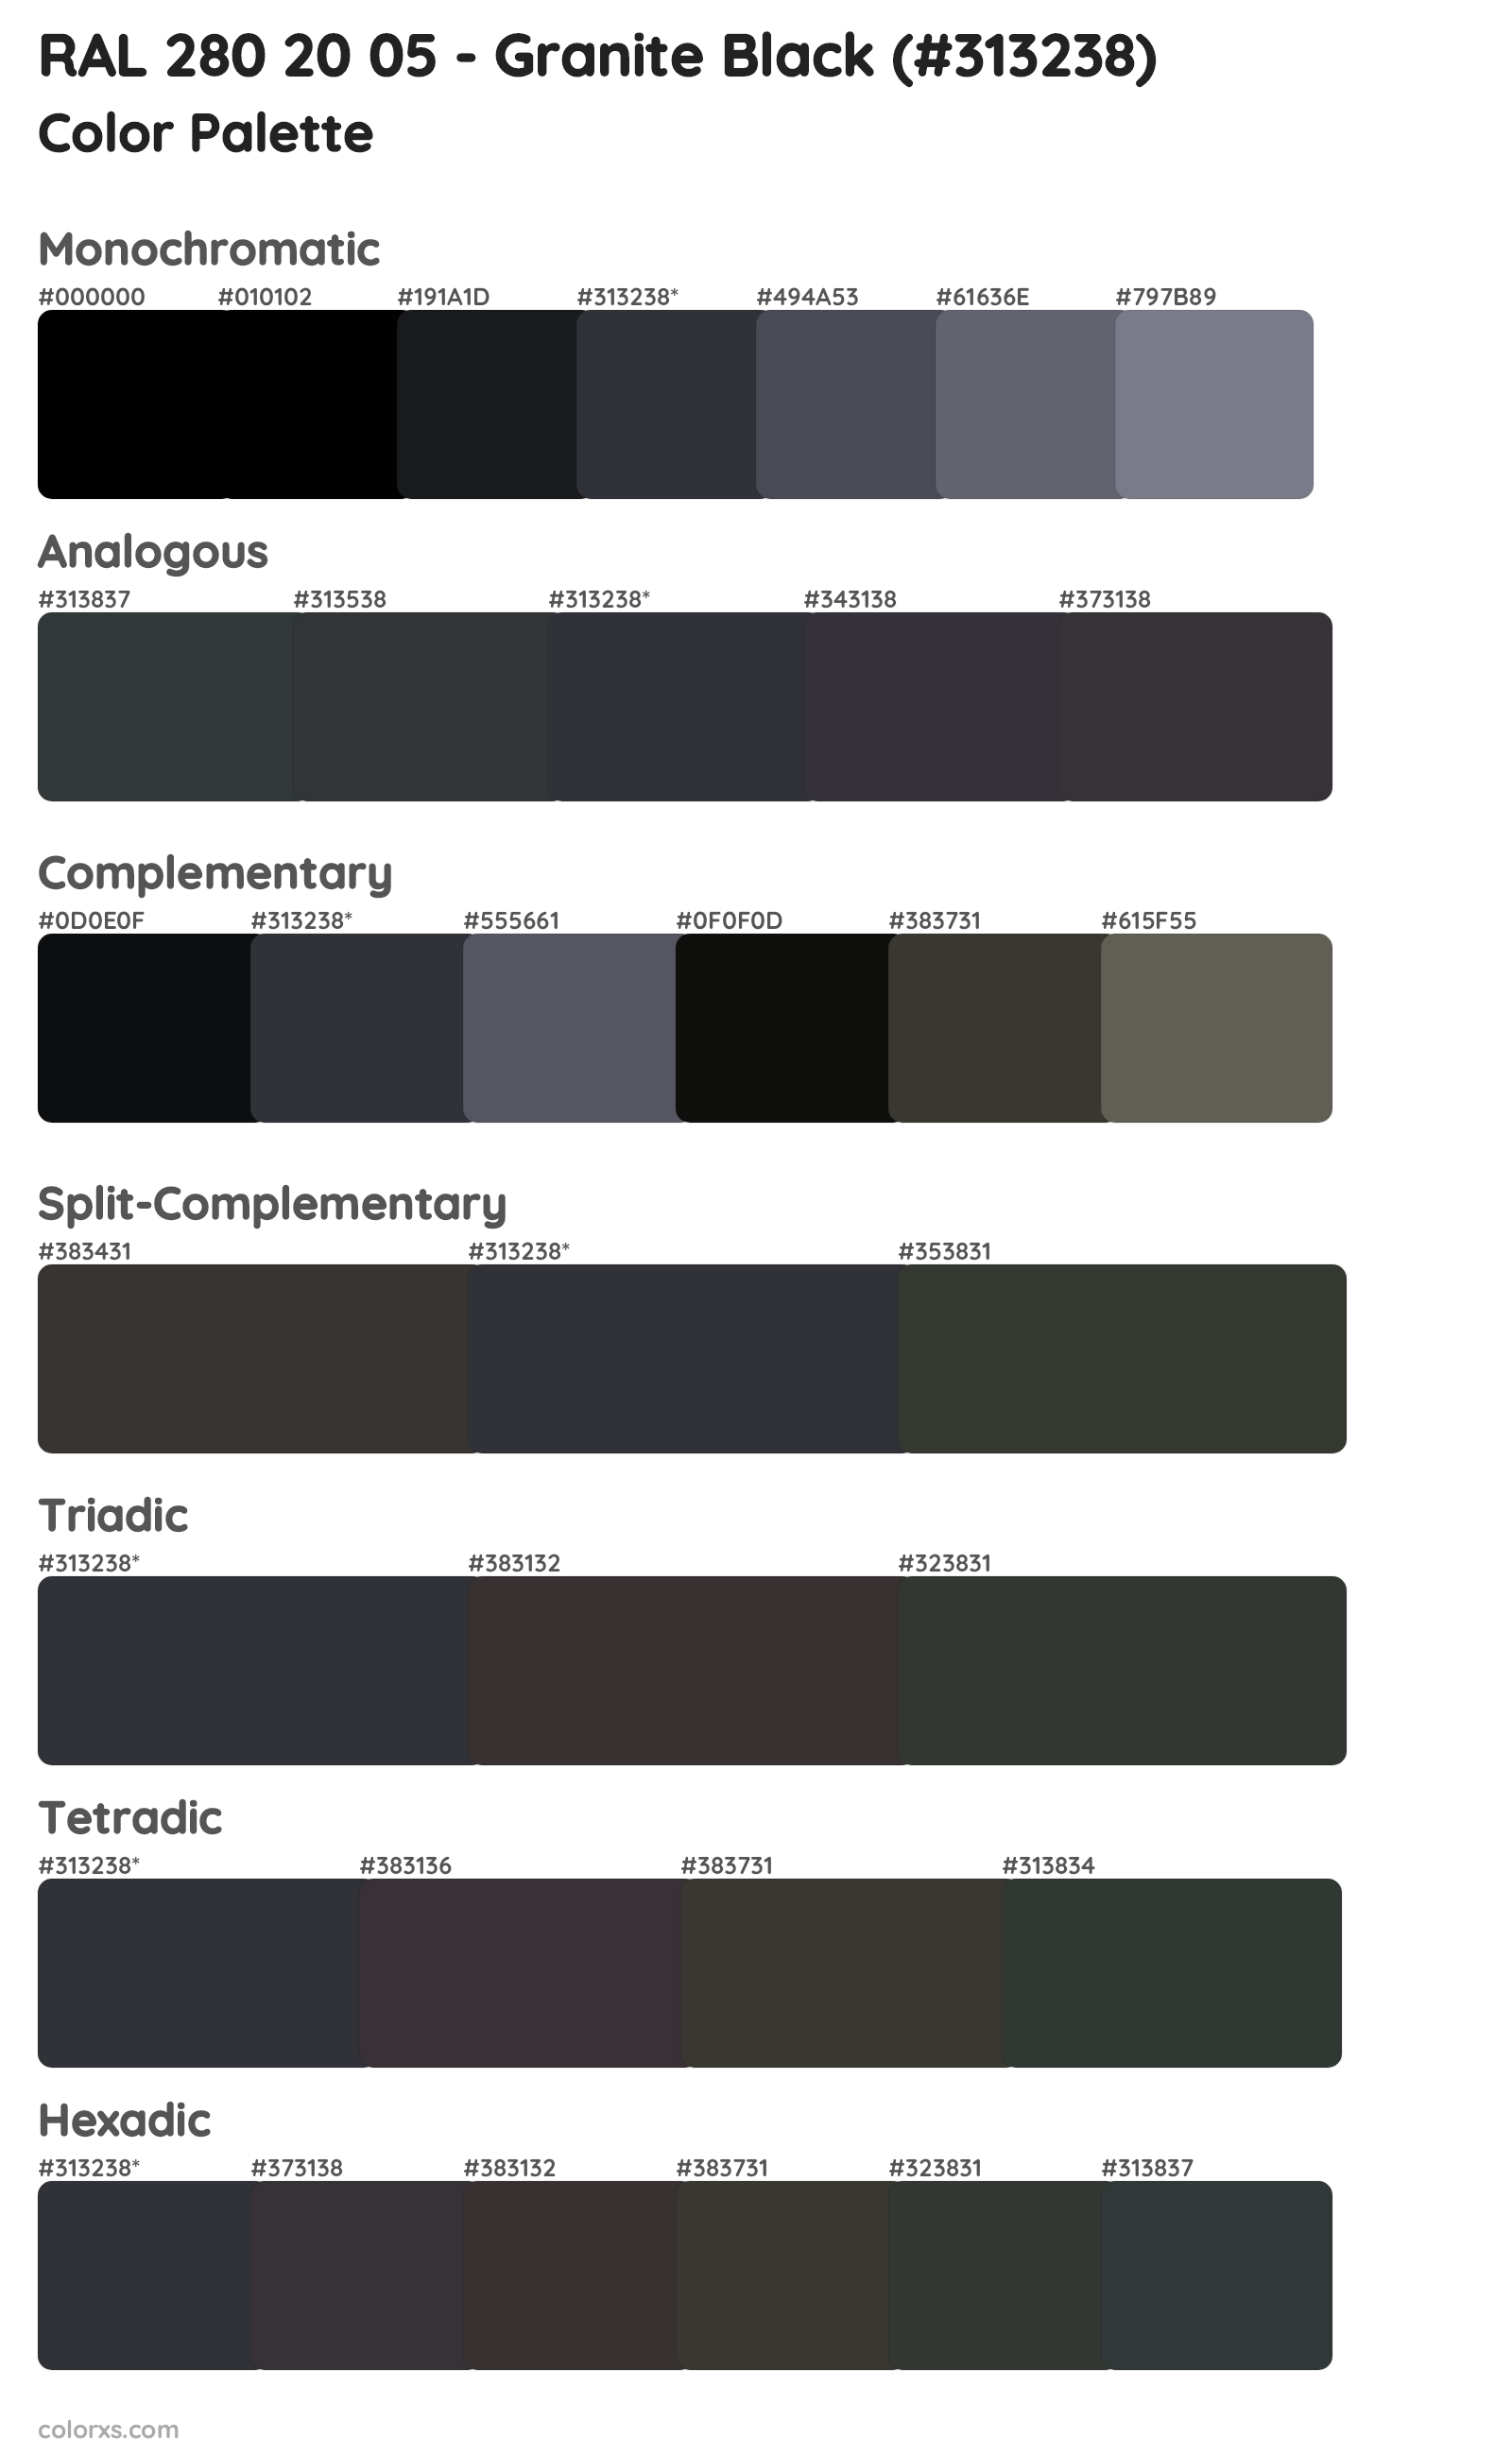 RAL 280 20 05 - Granite Black Color Scheme Palettes